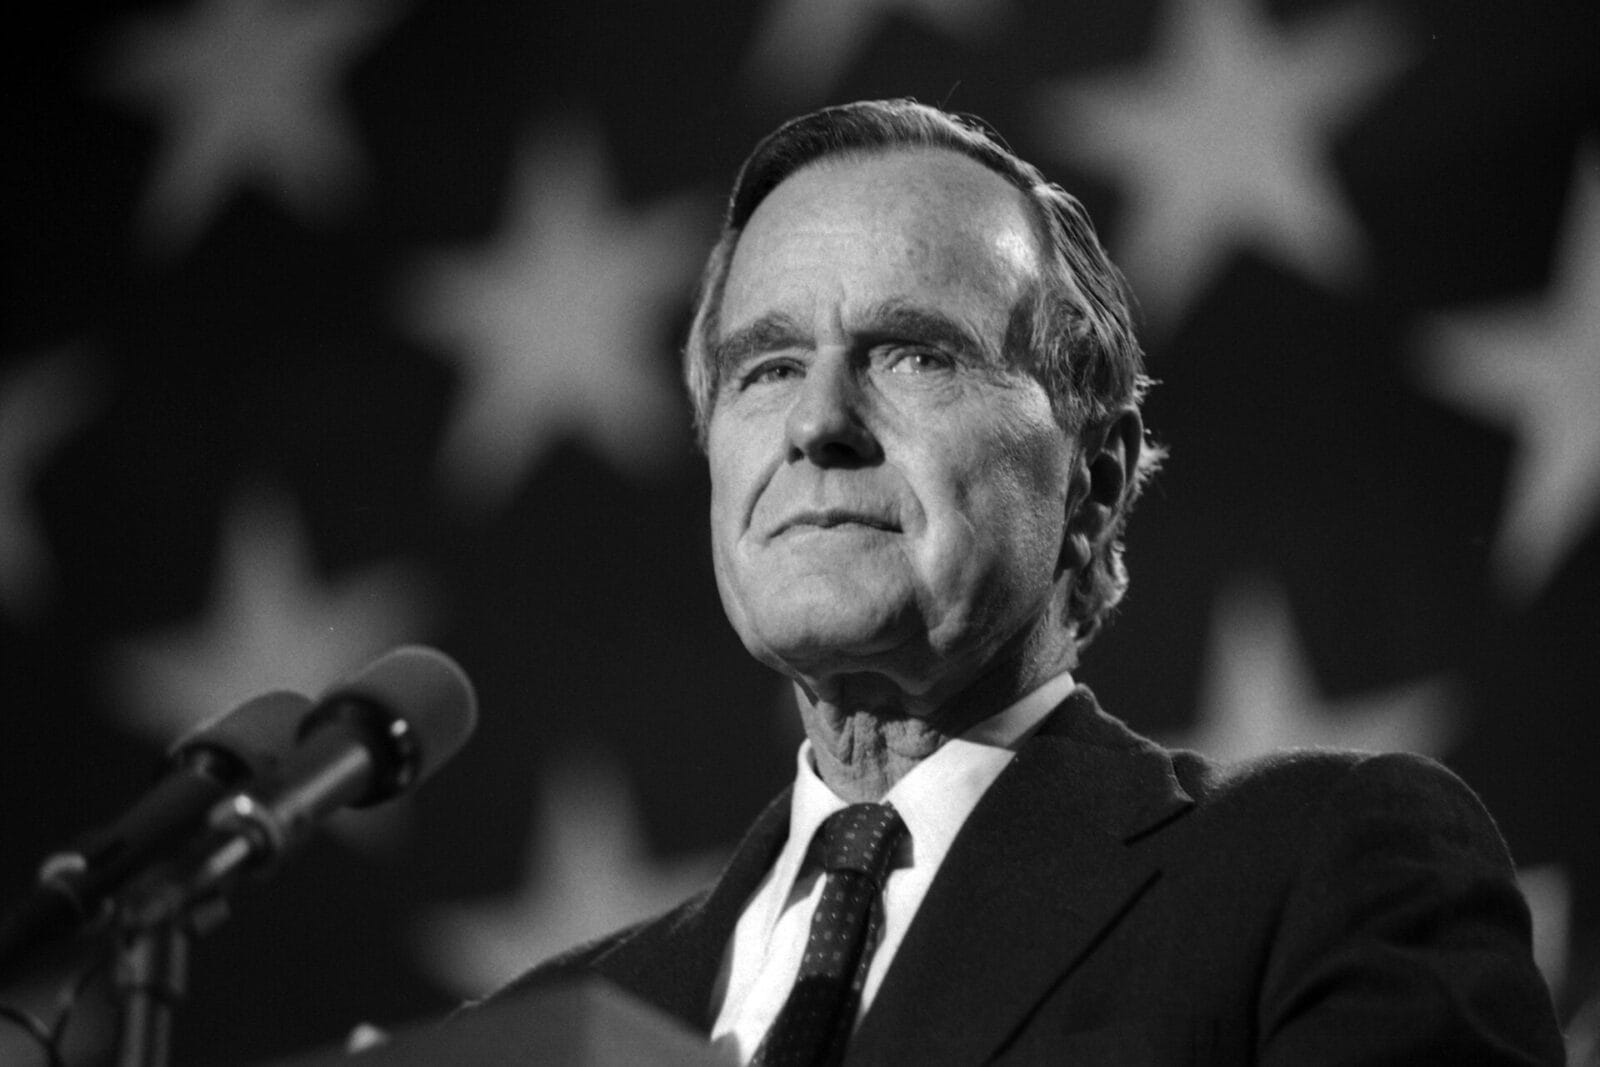 President George H.W. Bush's Legacy